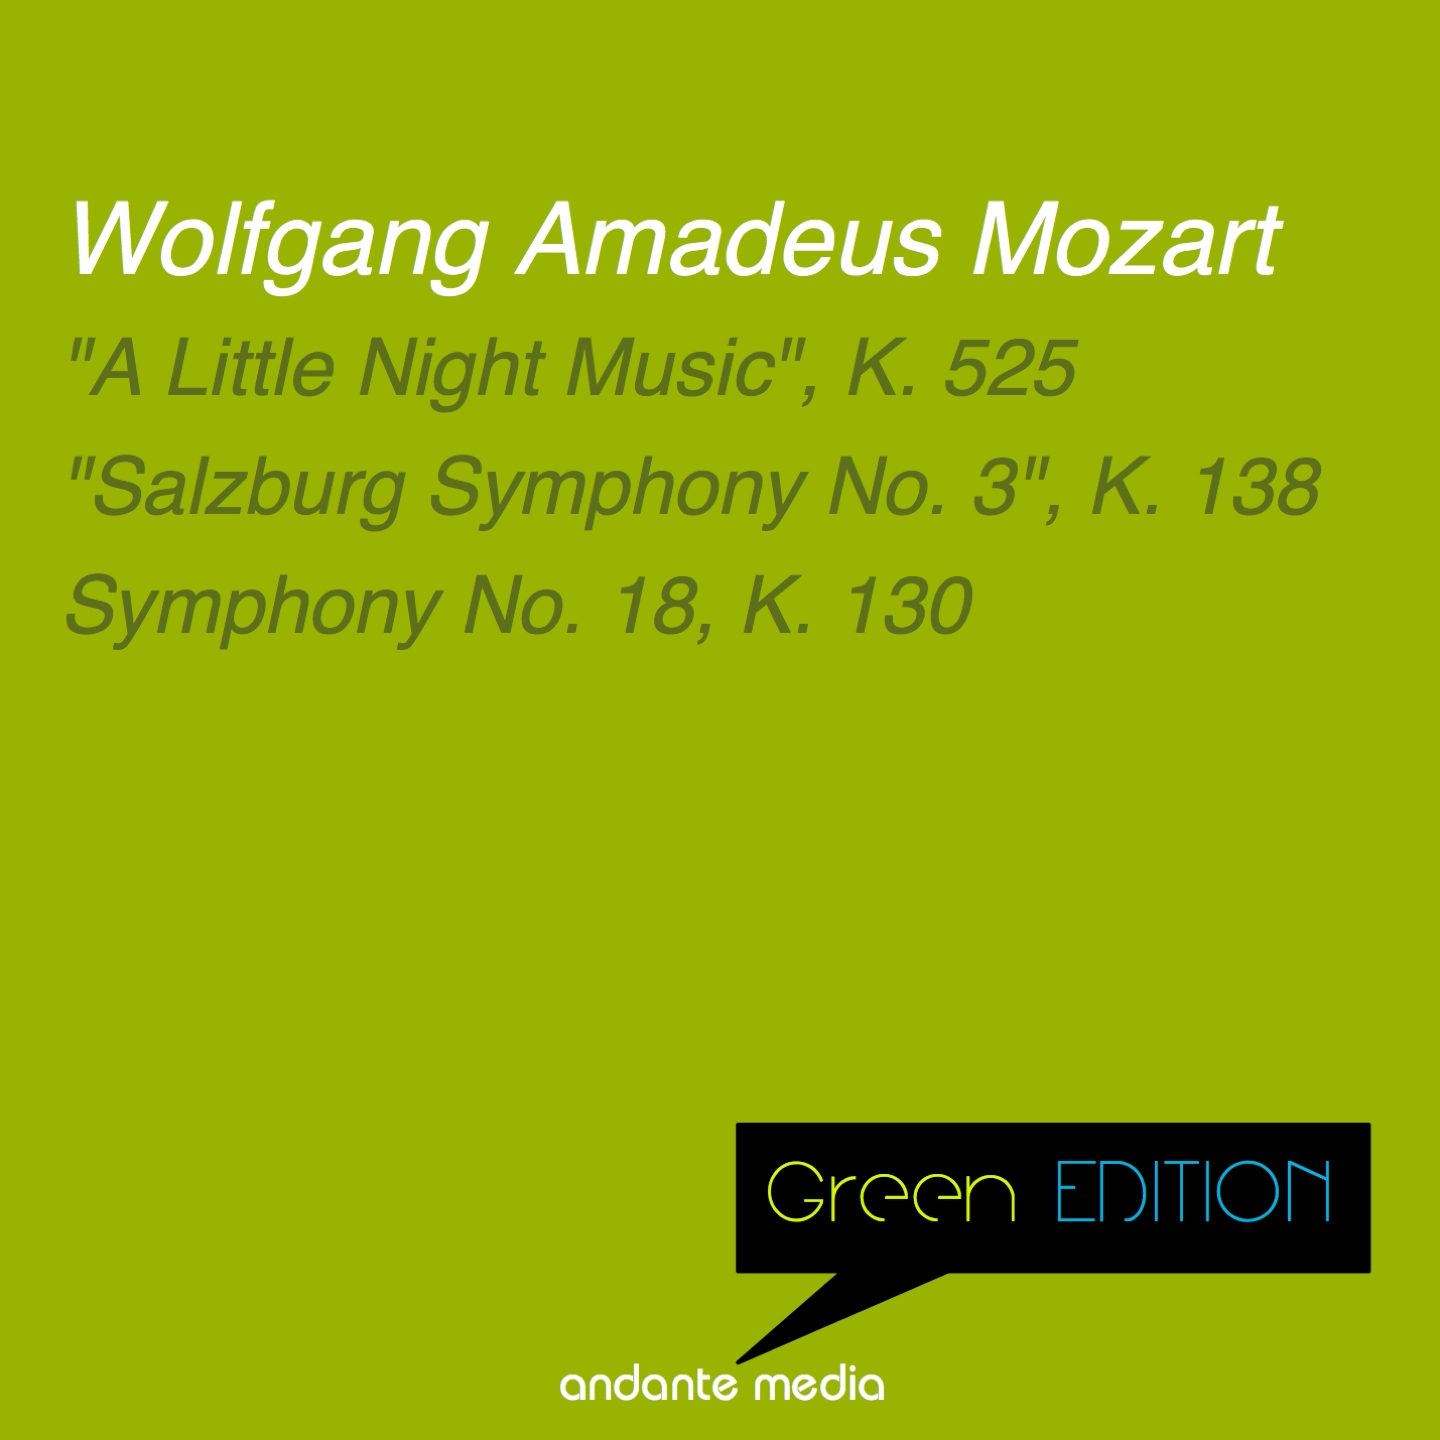 Green Edition - Mozart: "A Little Night Music", K. 525 & Symphony No. 18, K. 130